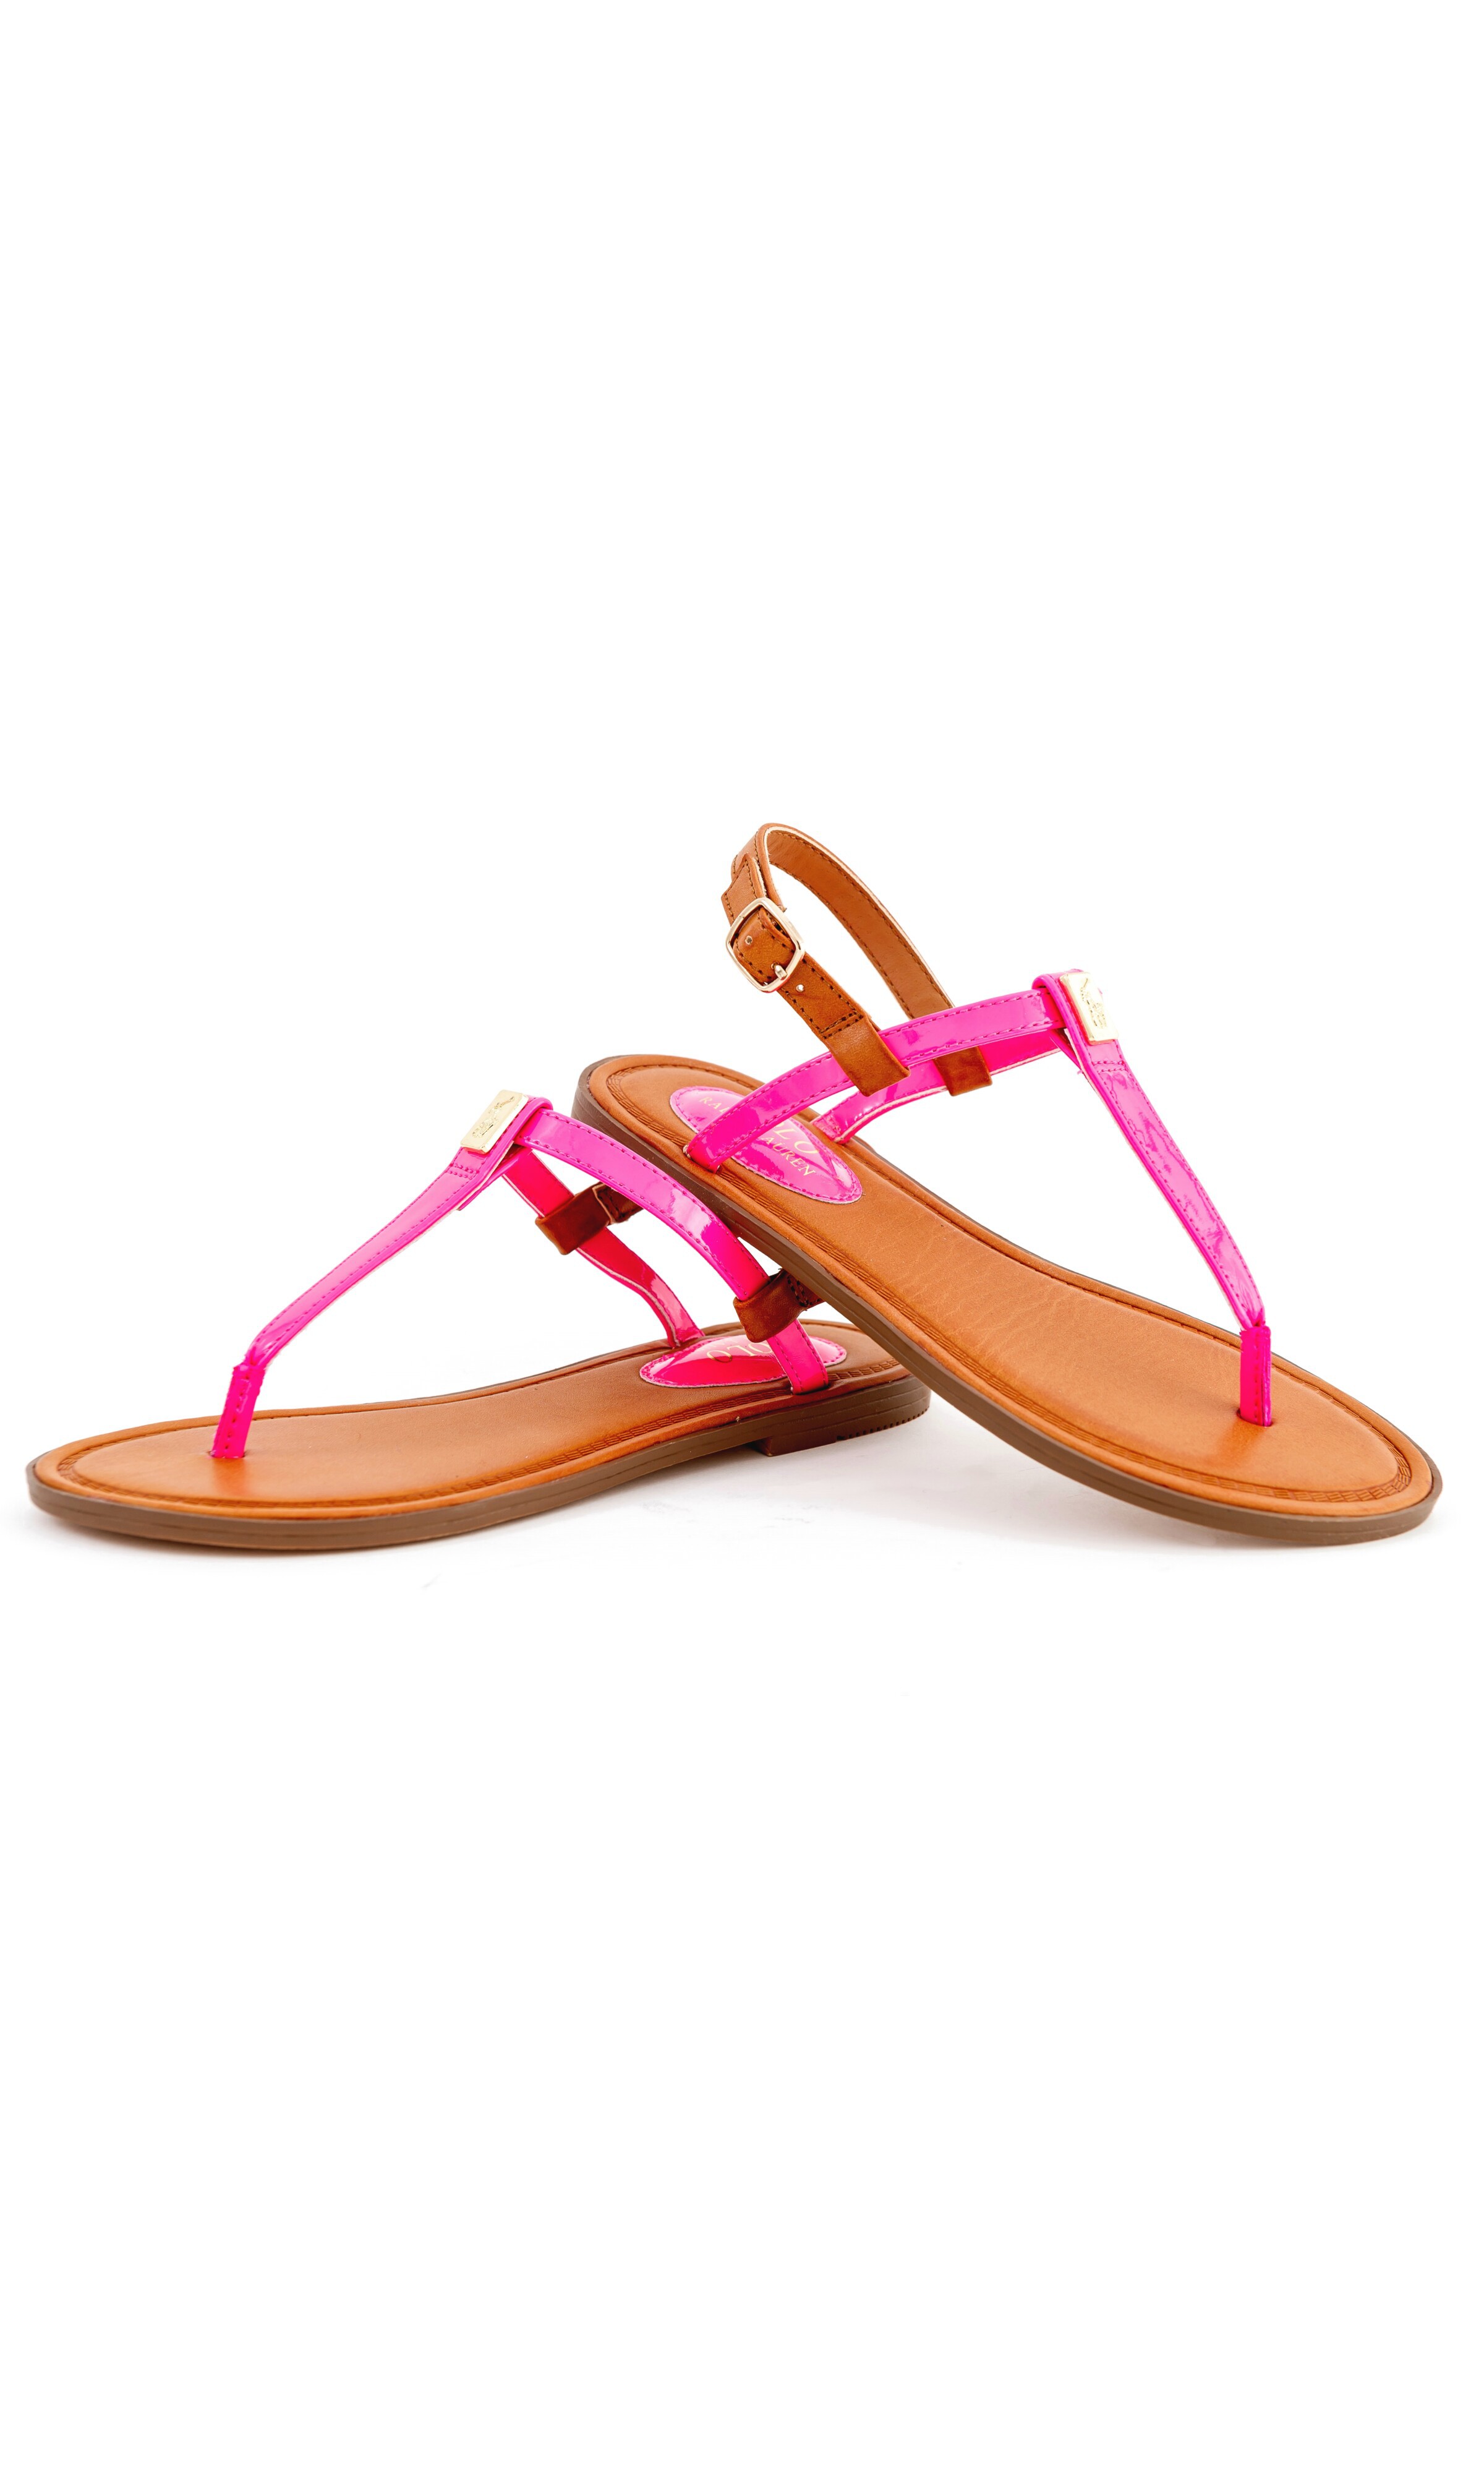 Pink leather flip-flops, Polo Ralph Lauren - Celebrity Club